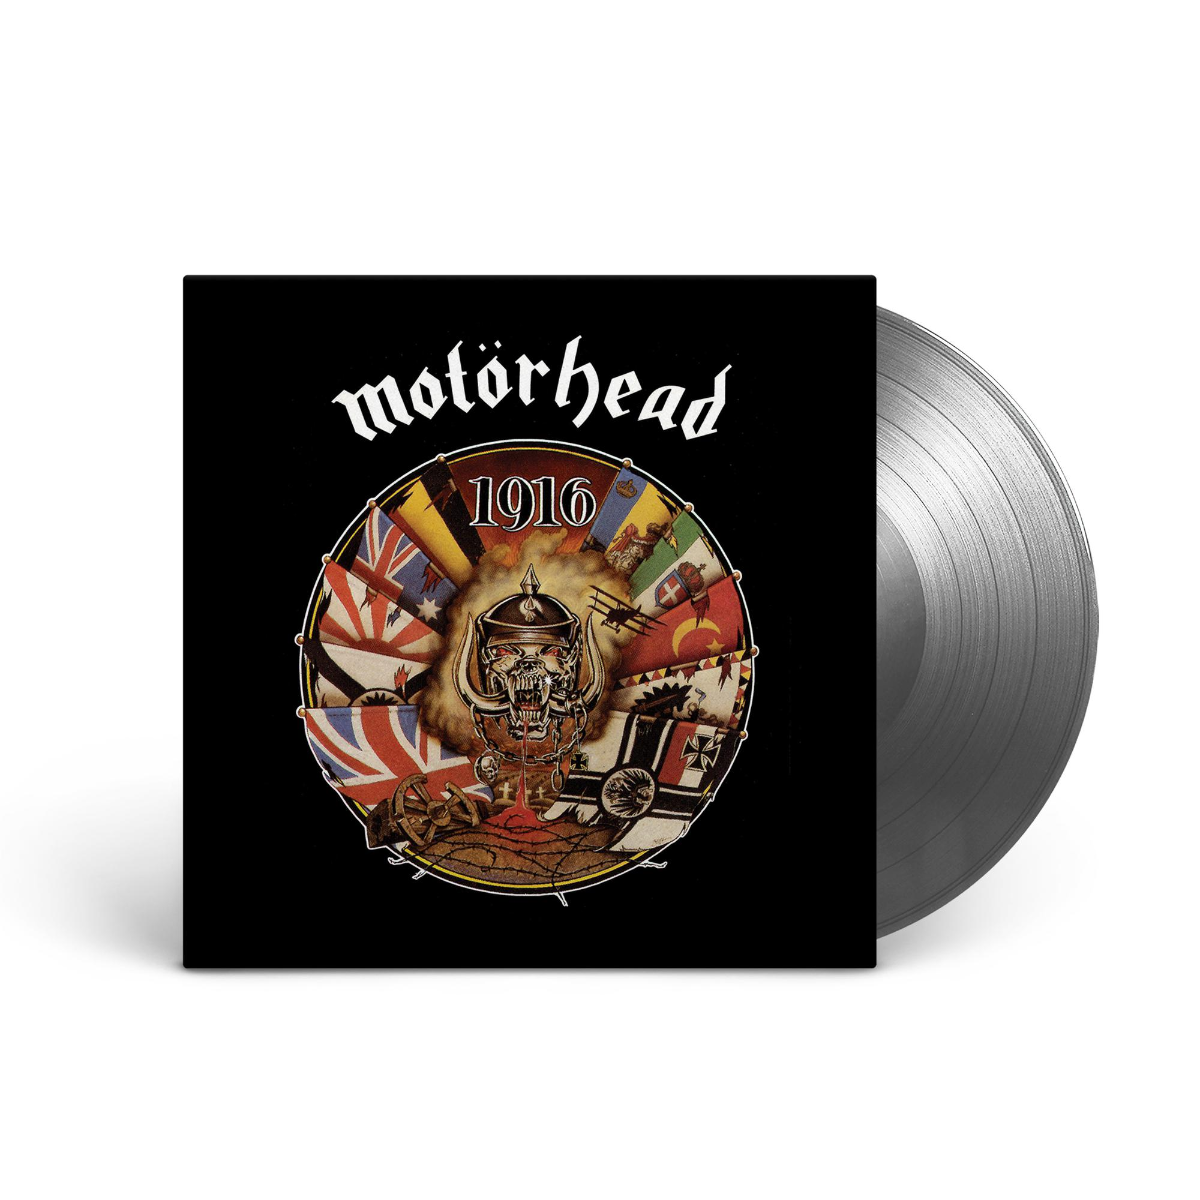 Motorhead 1916 Vinyl